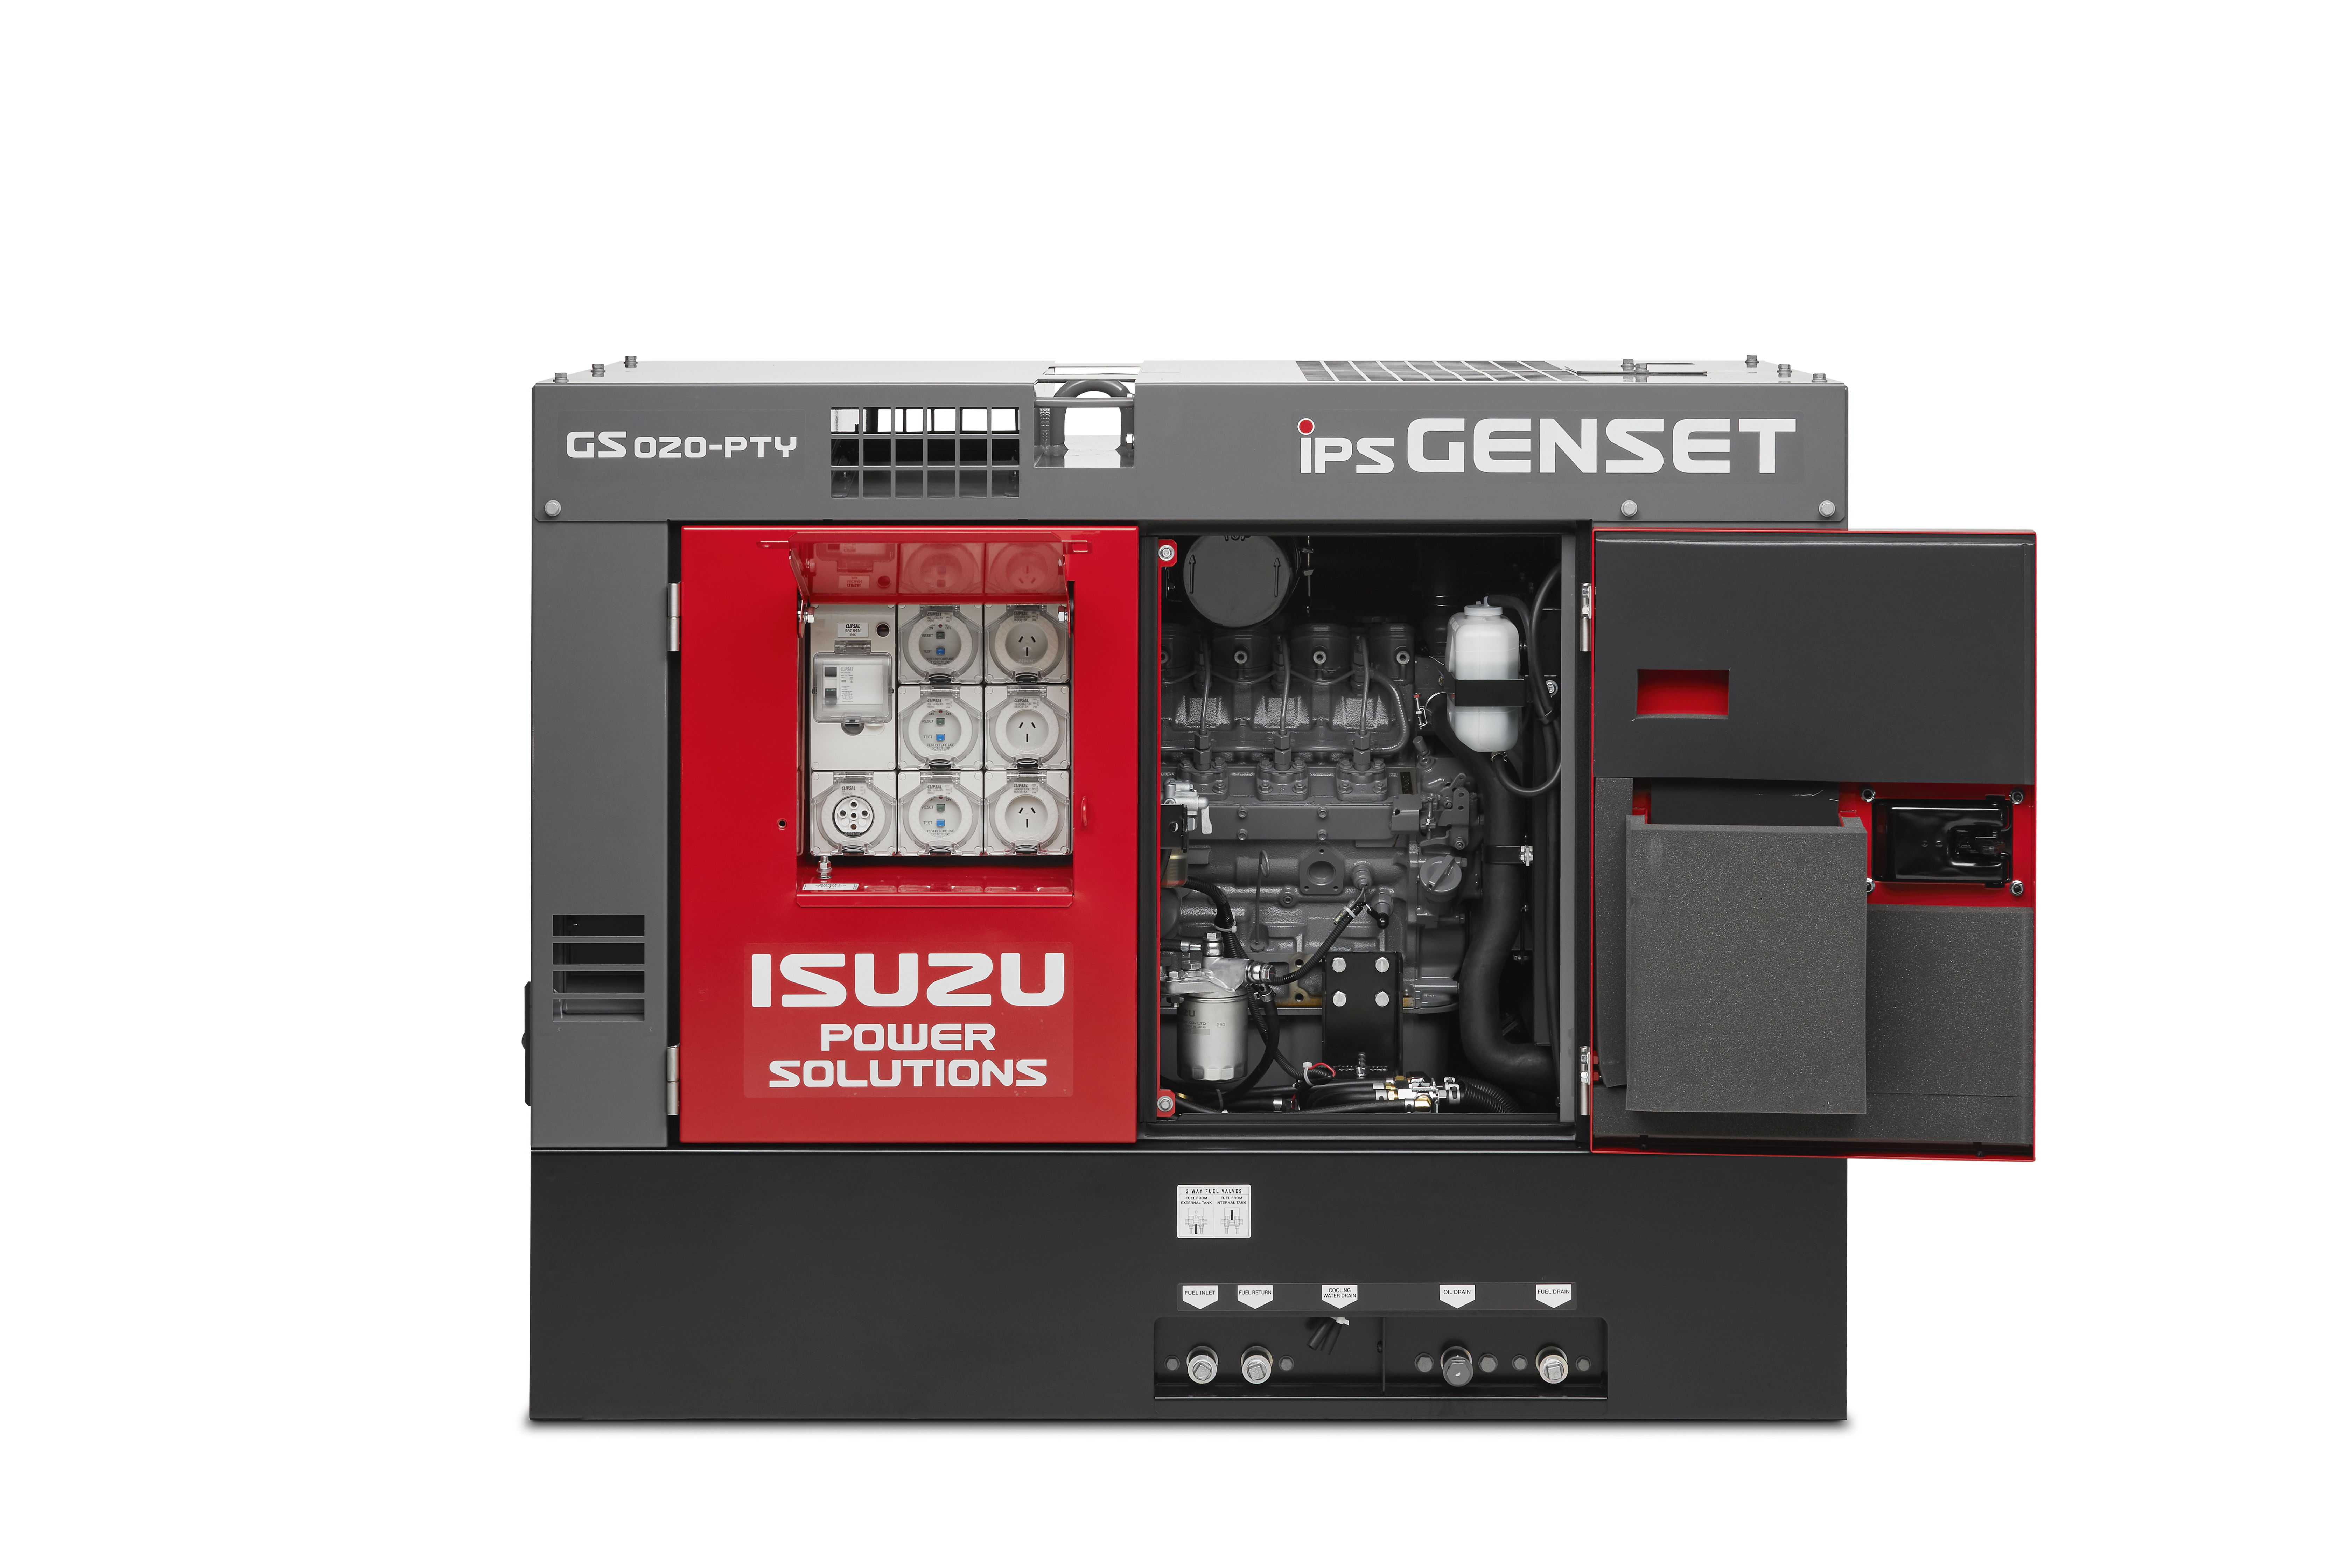 Isuzu Power Solutions GS020-PTY generator set